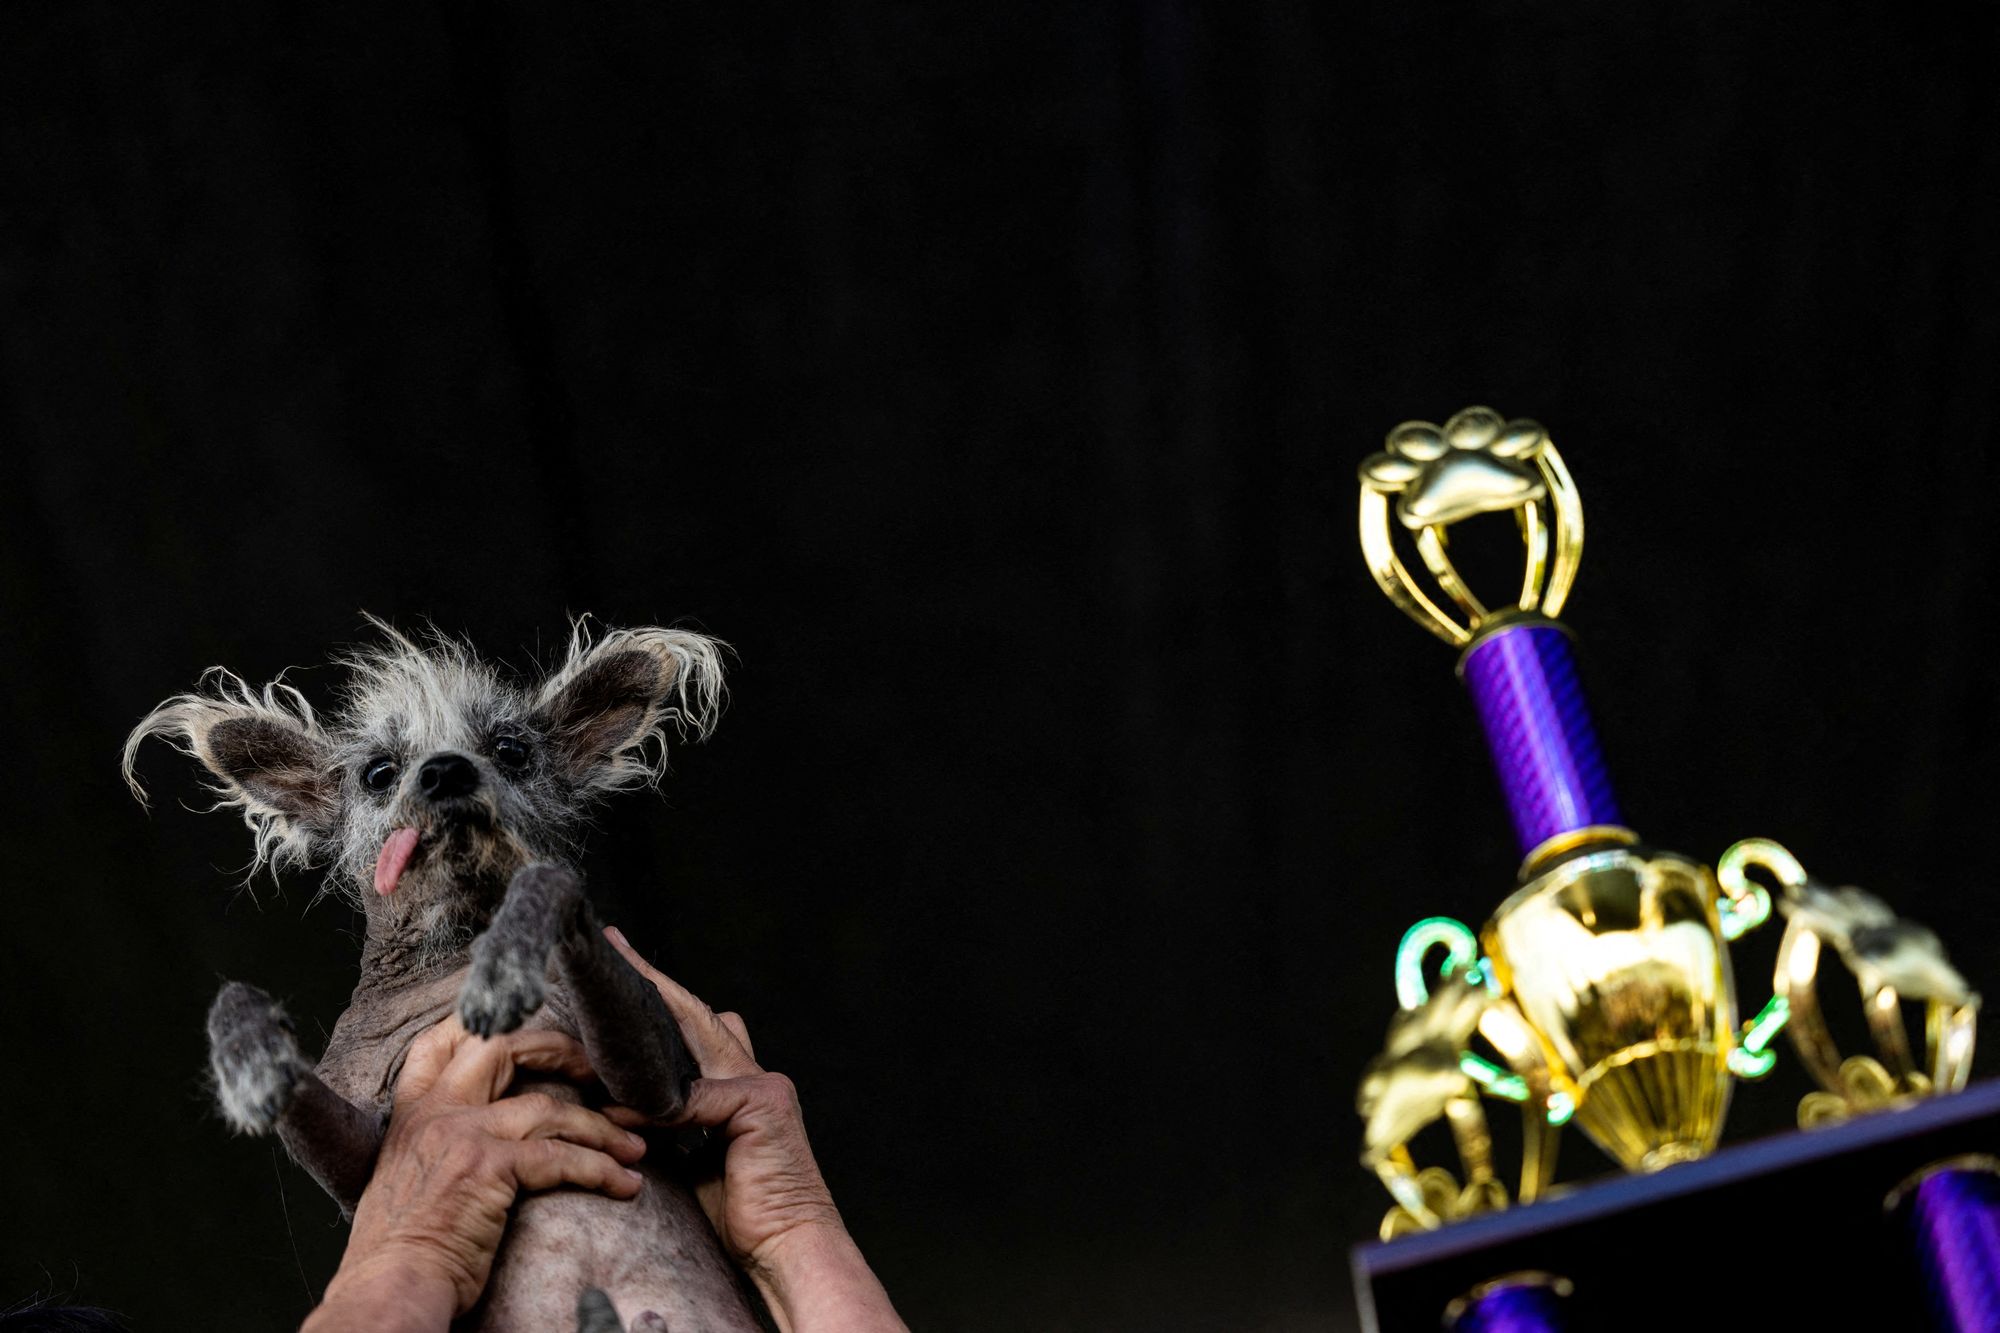 World's Ugliest Dog winner Scooter